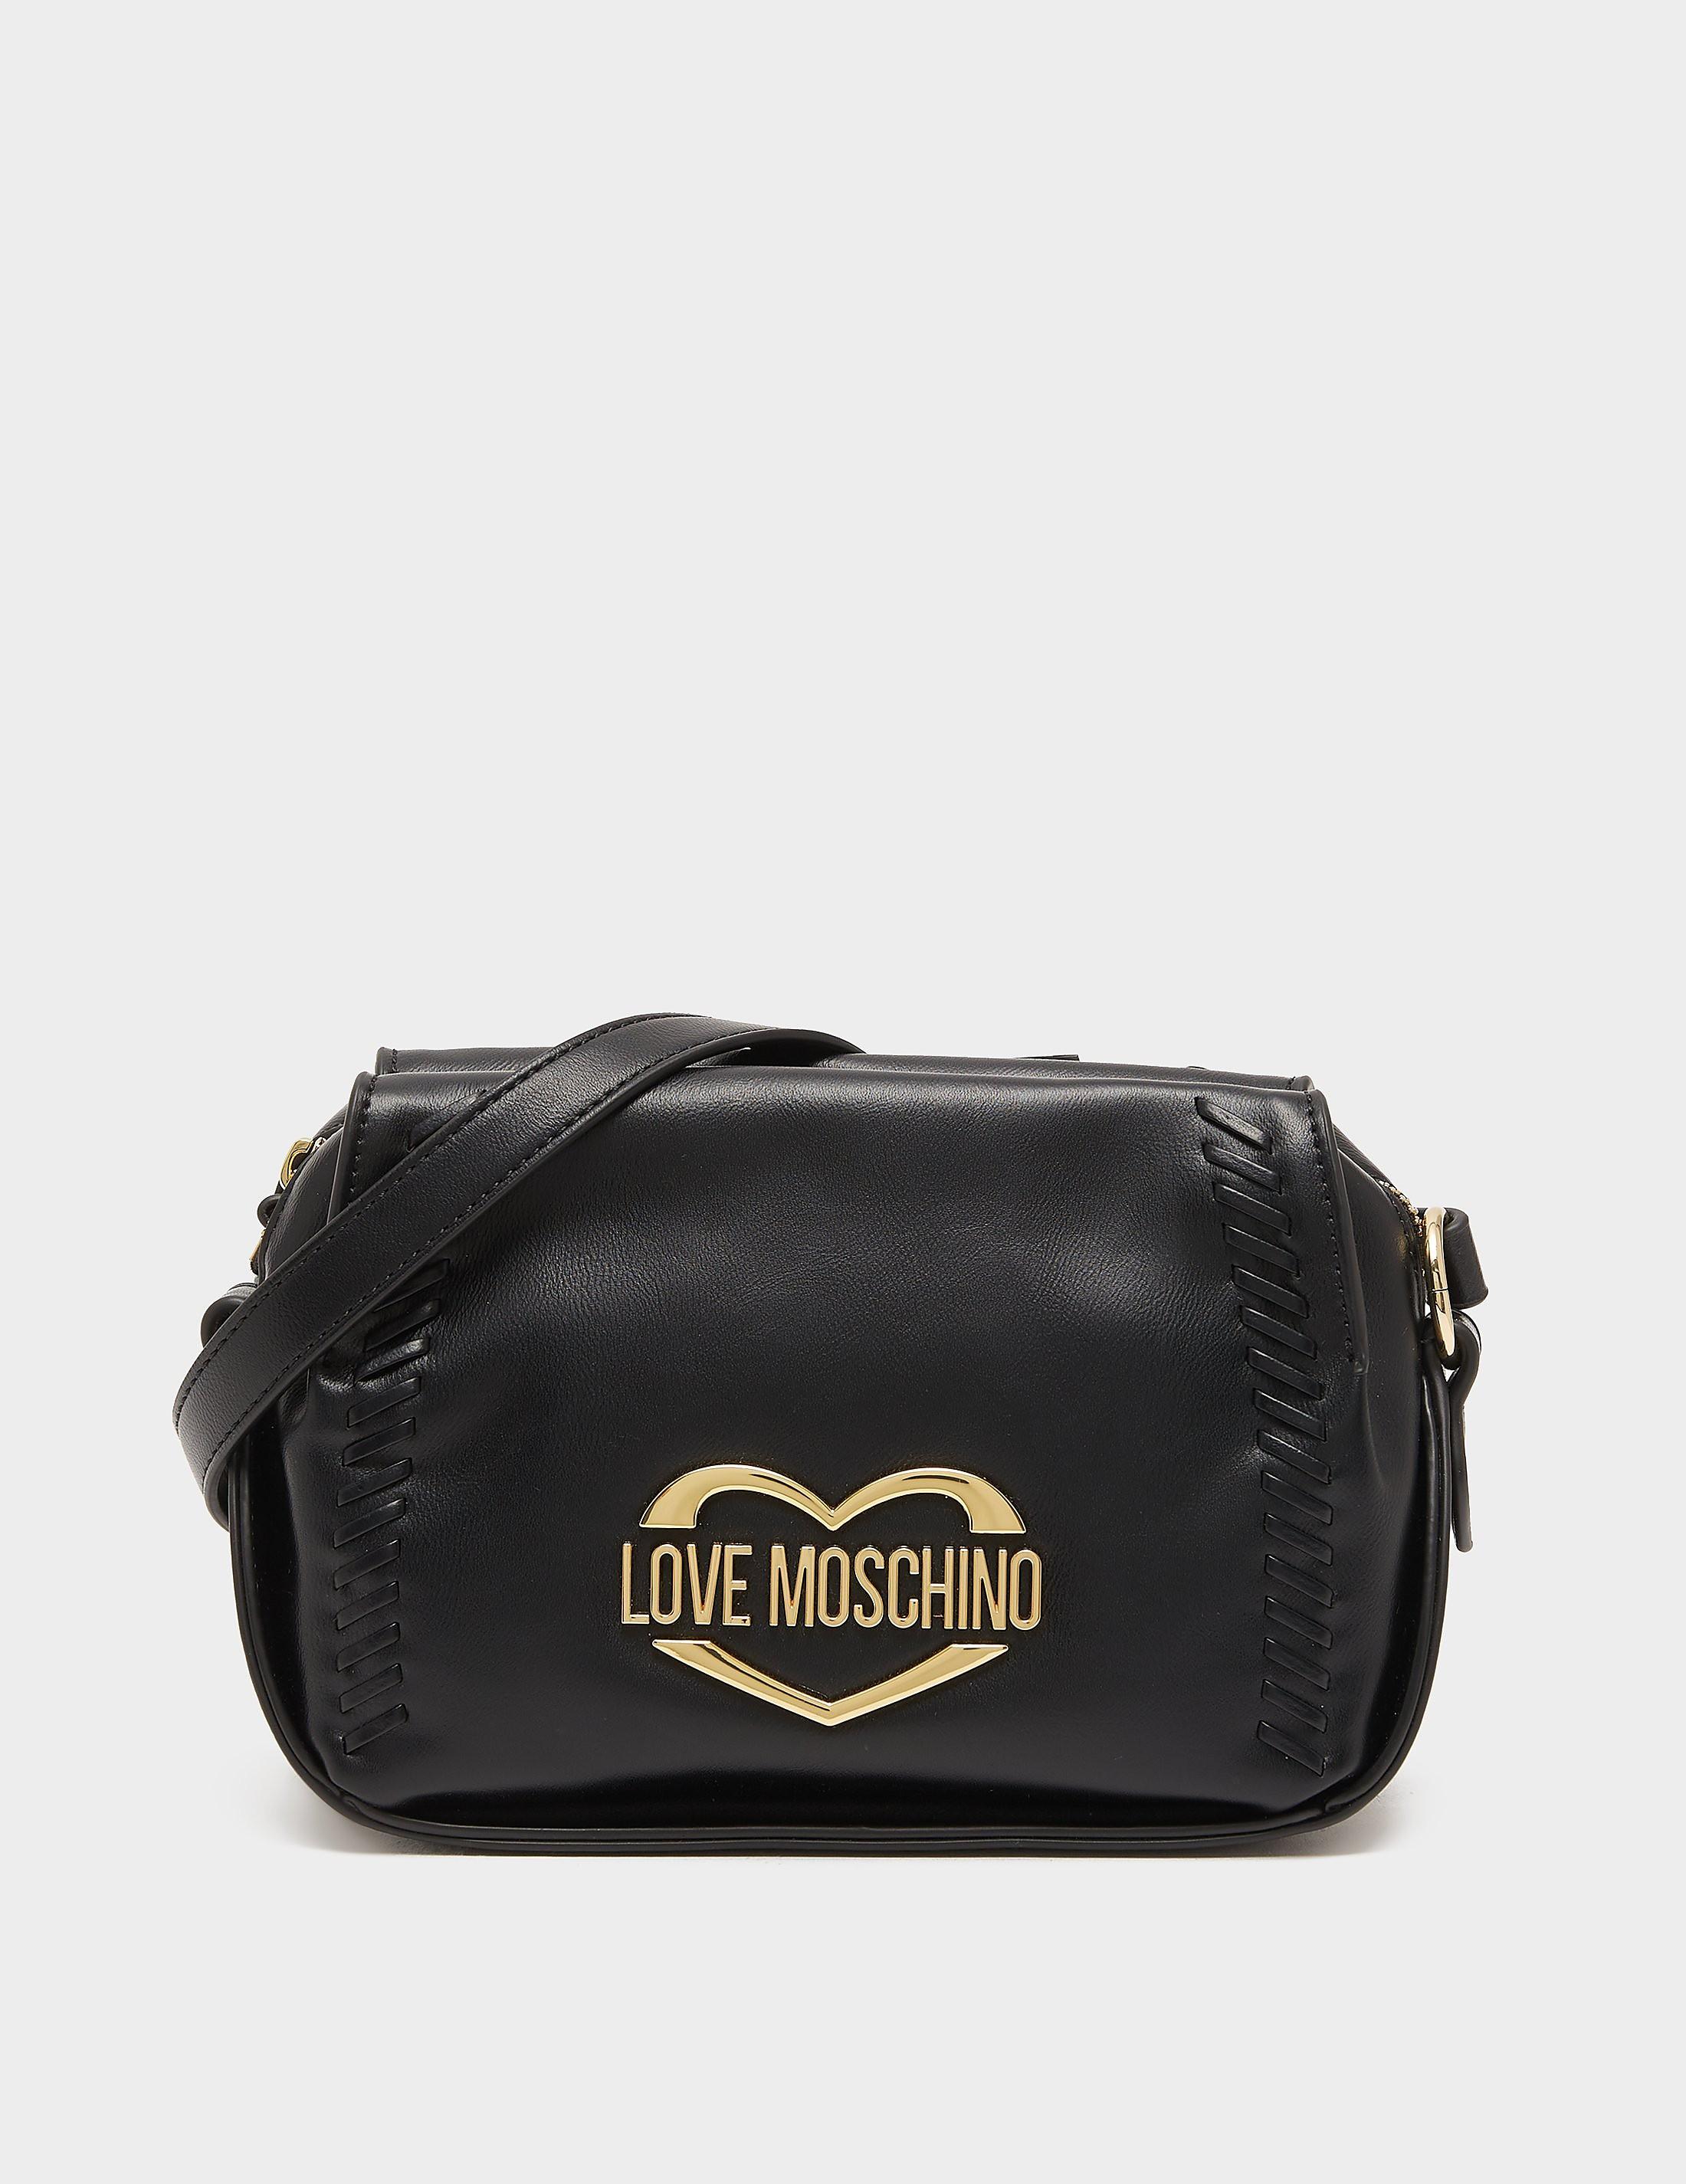 Love Moschino Stitch Detail Camera Bag in Black | Lyst